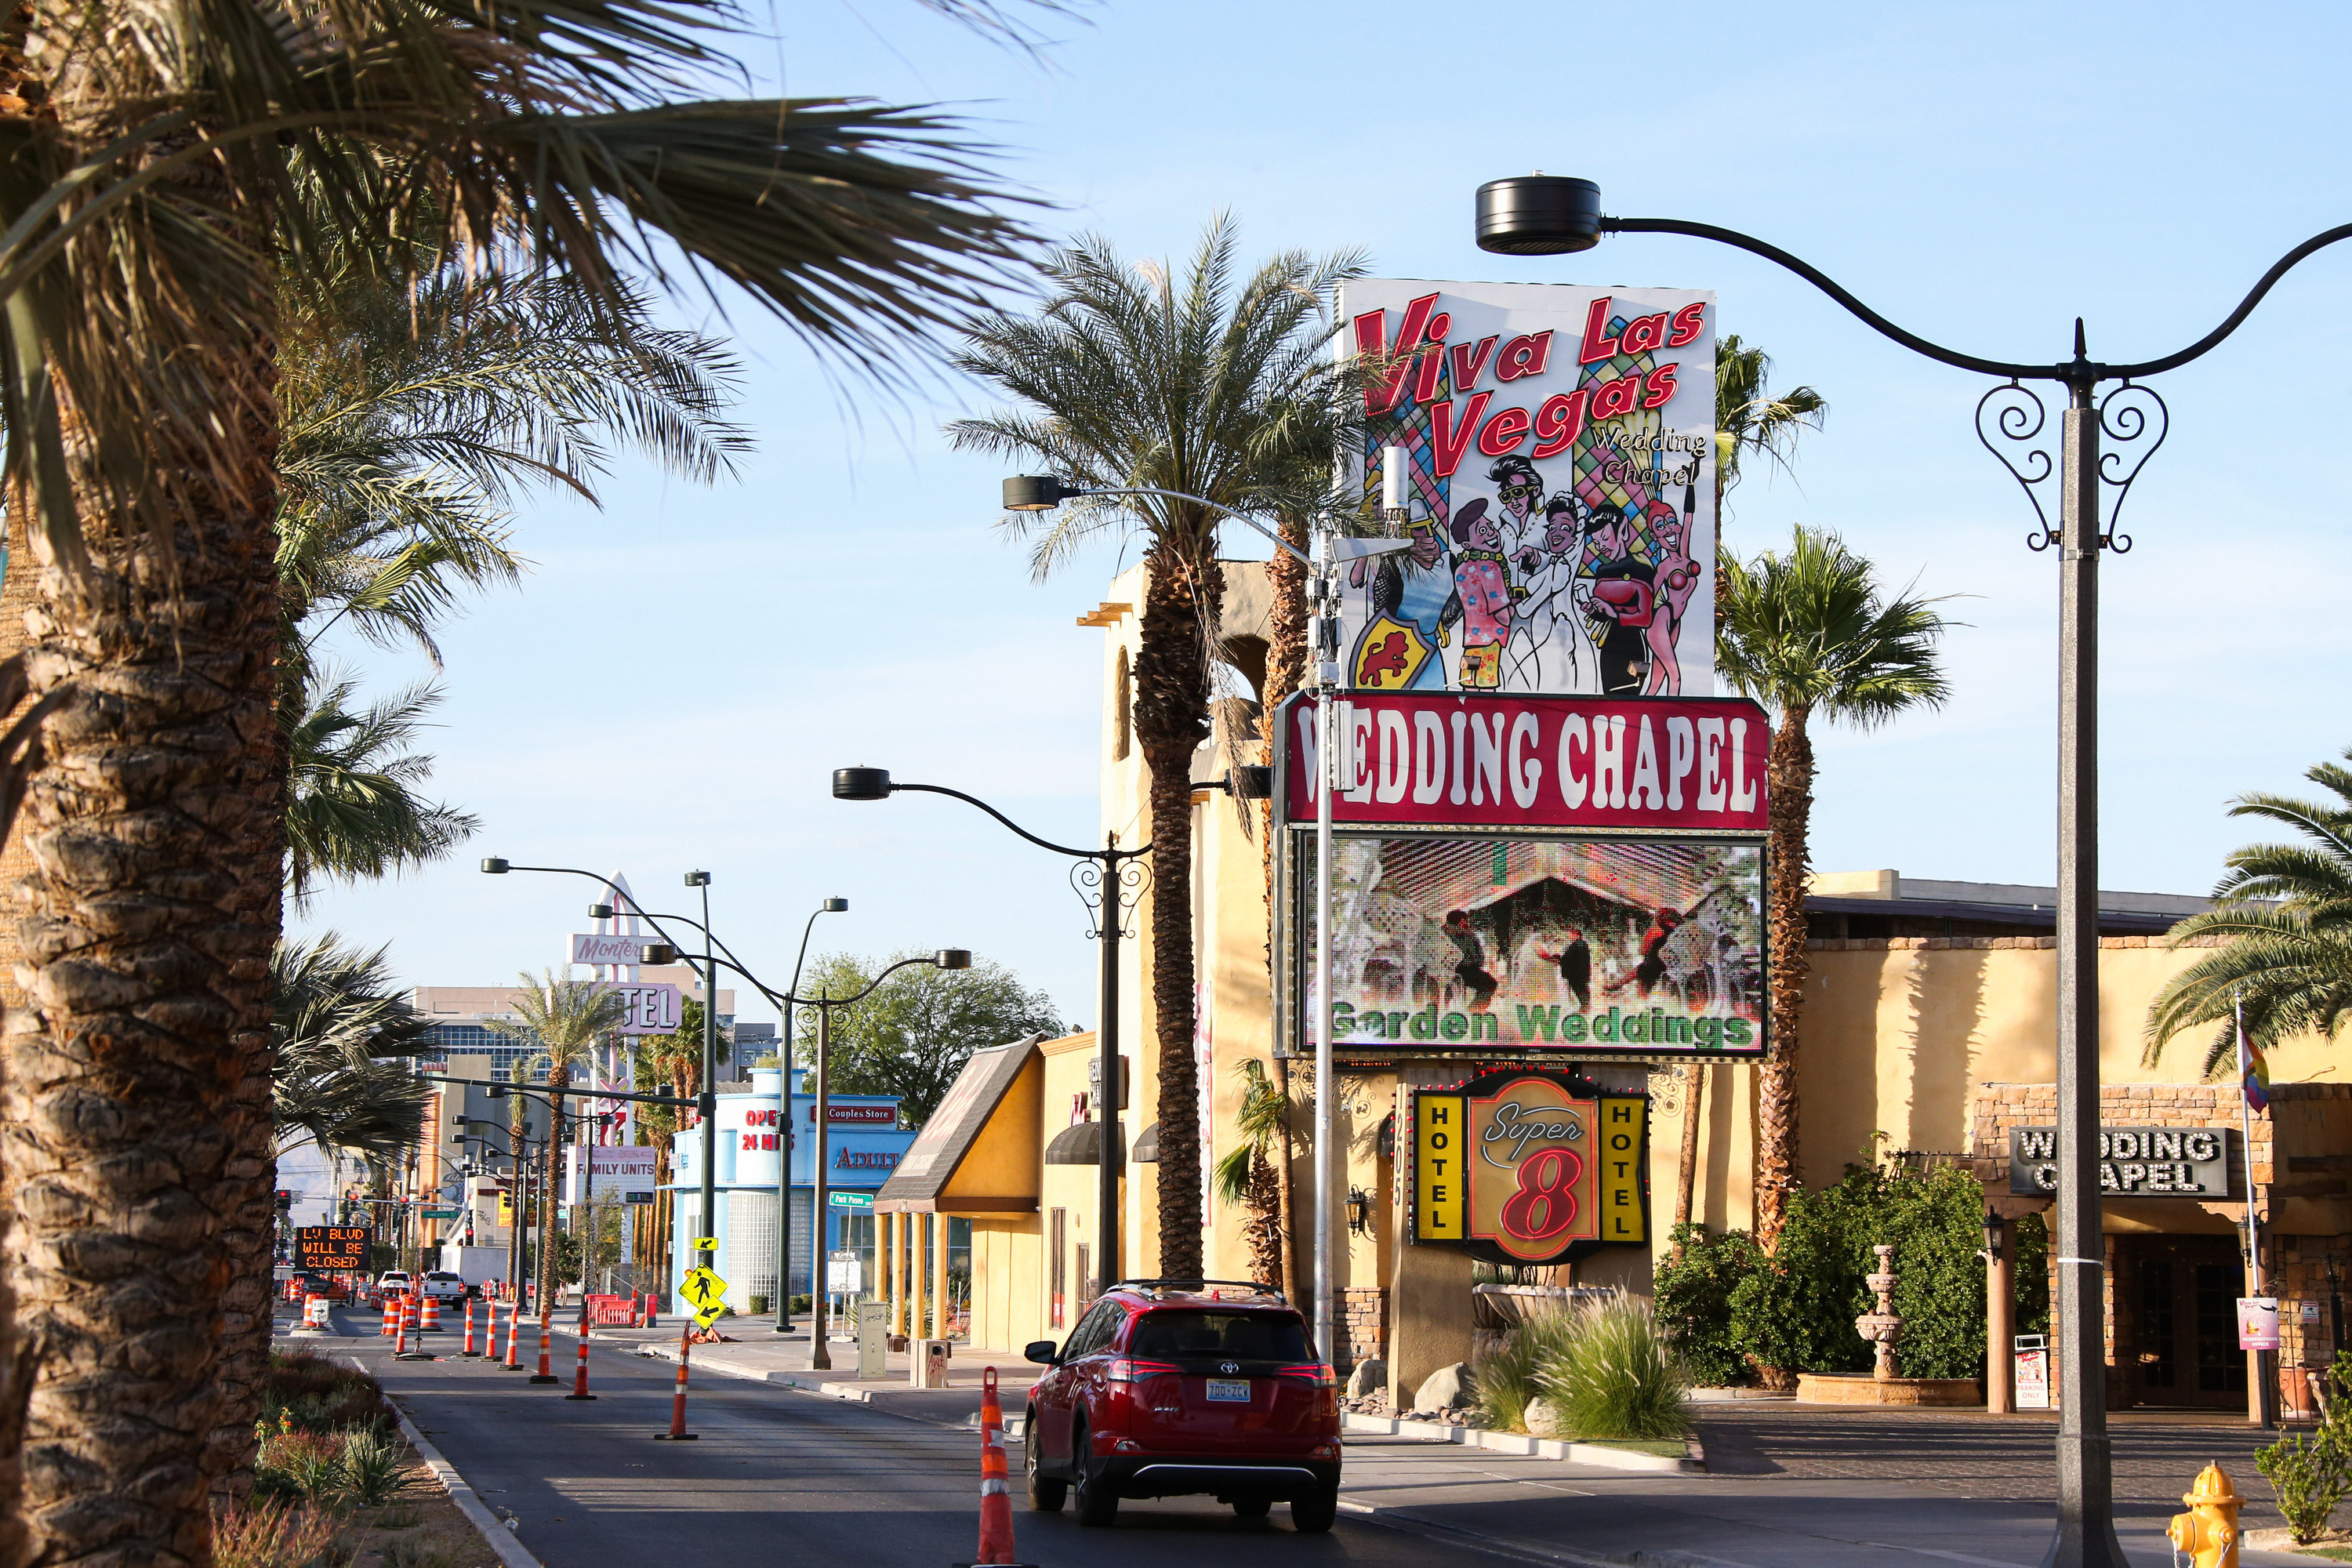 Las Vegas wedding chapped on Las Vegas strip, palm trees surround the buildings